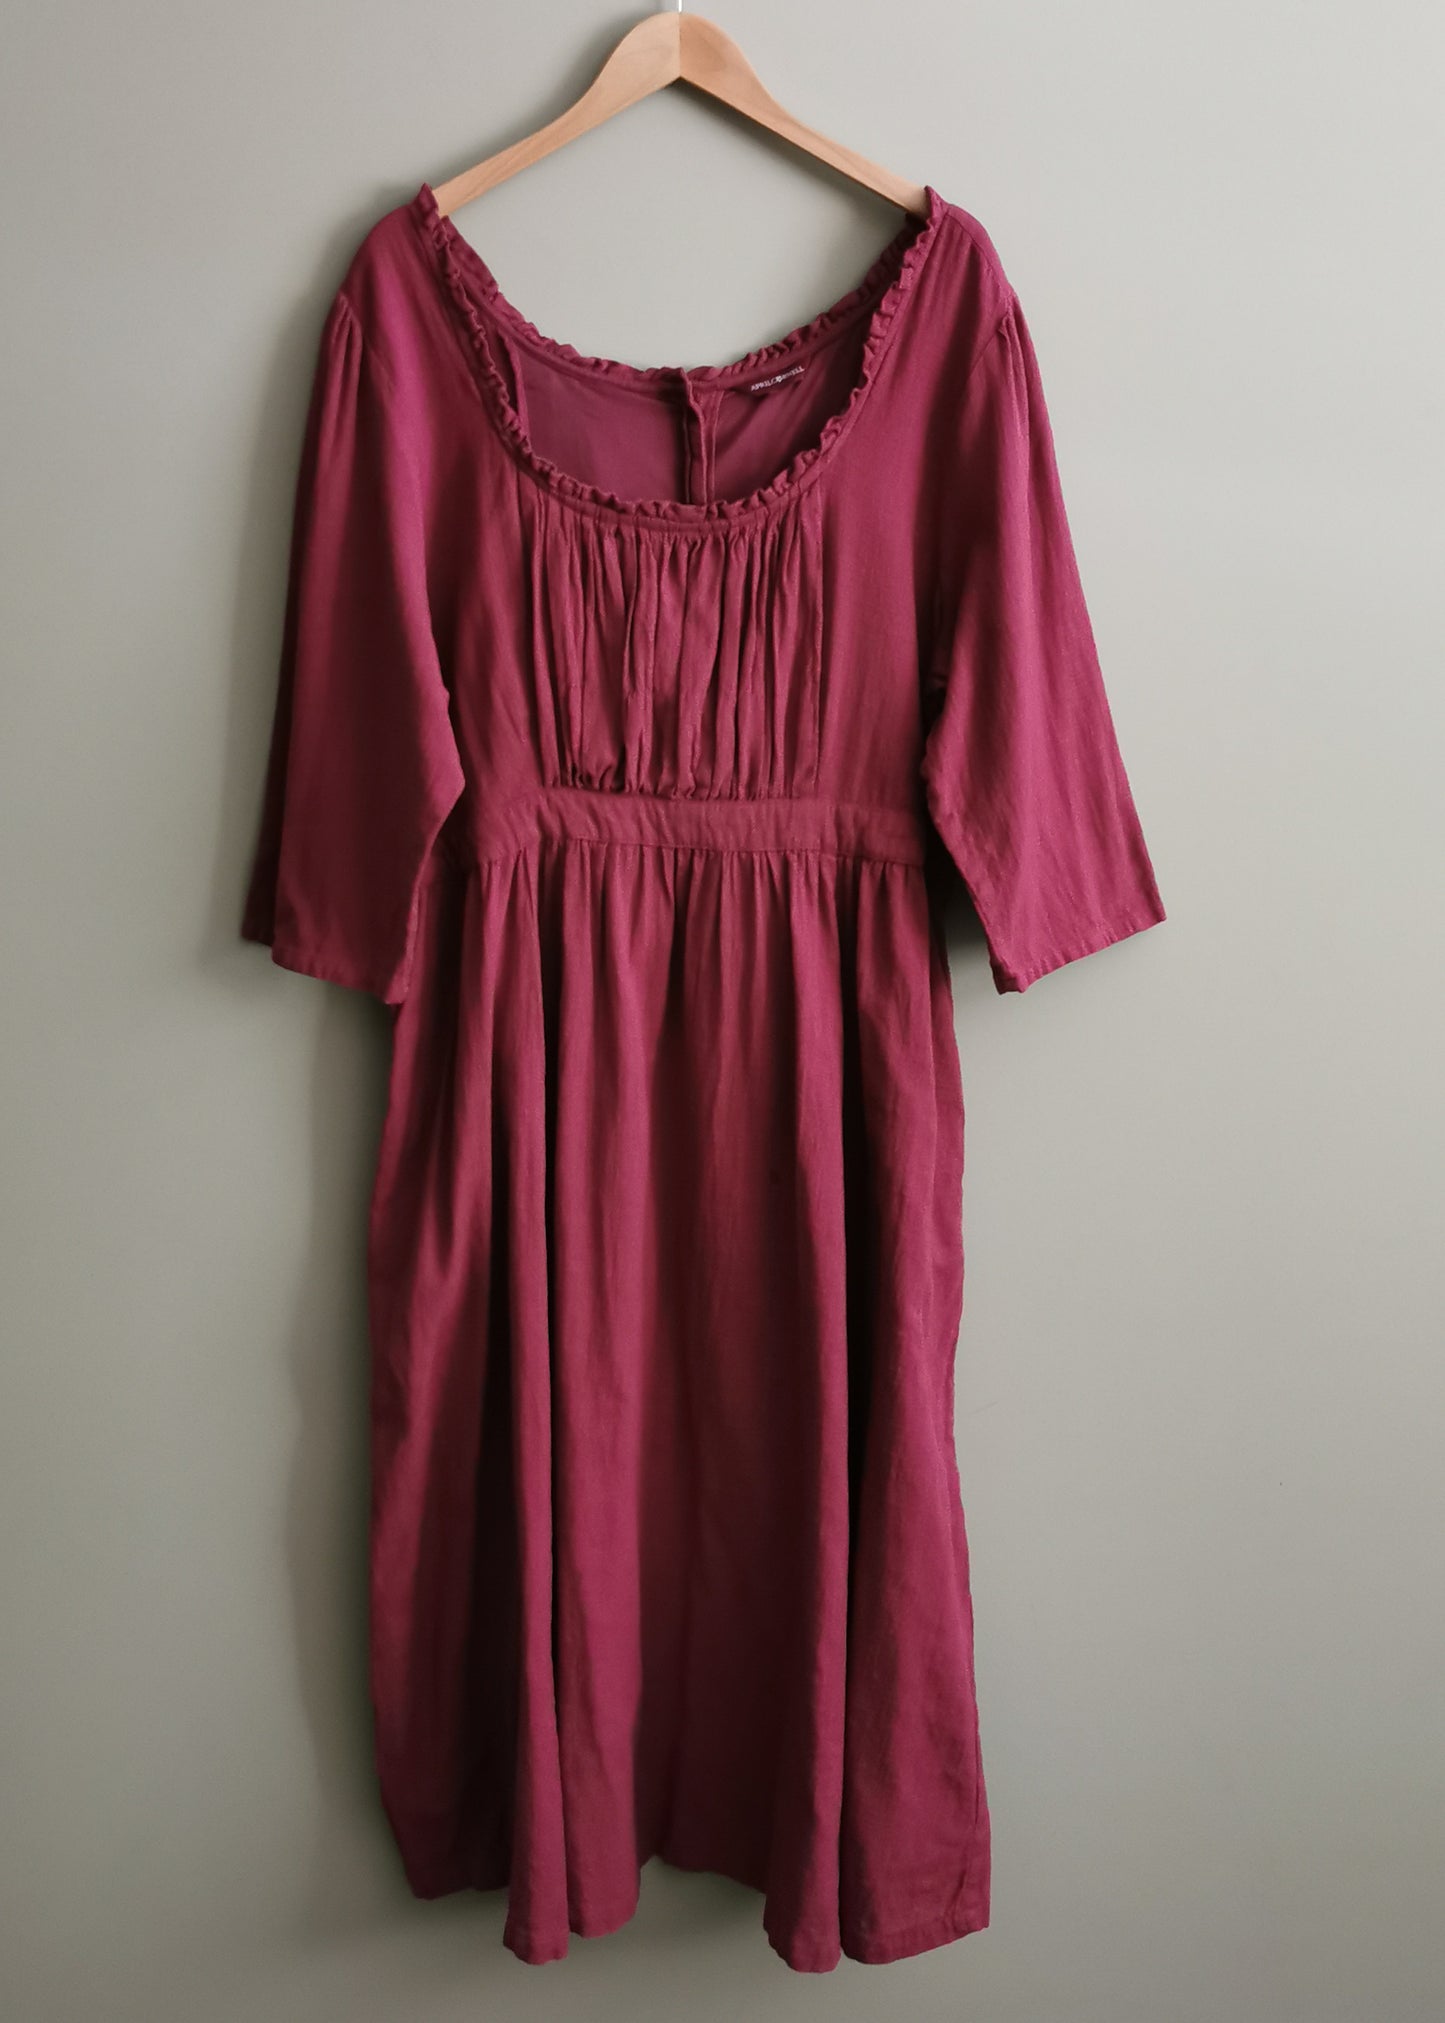 April Cornell Cotton Jane Austen Dress (XXL)